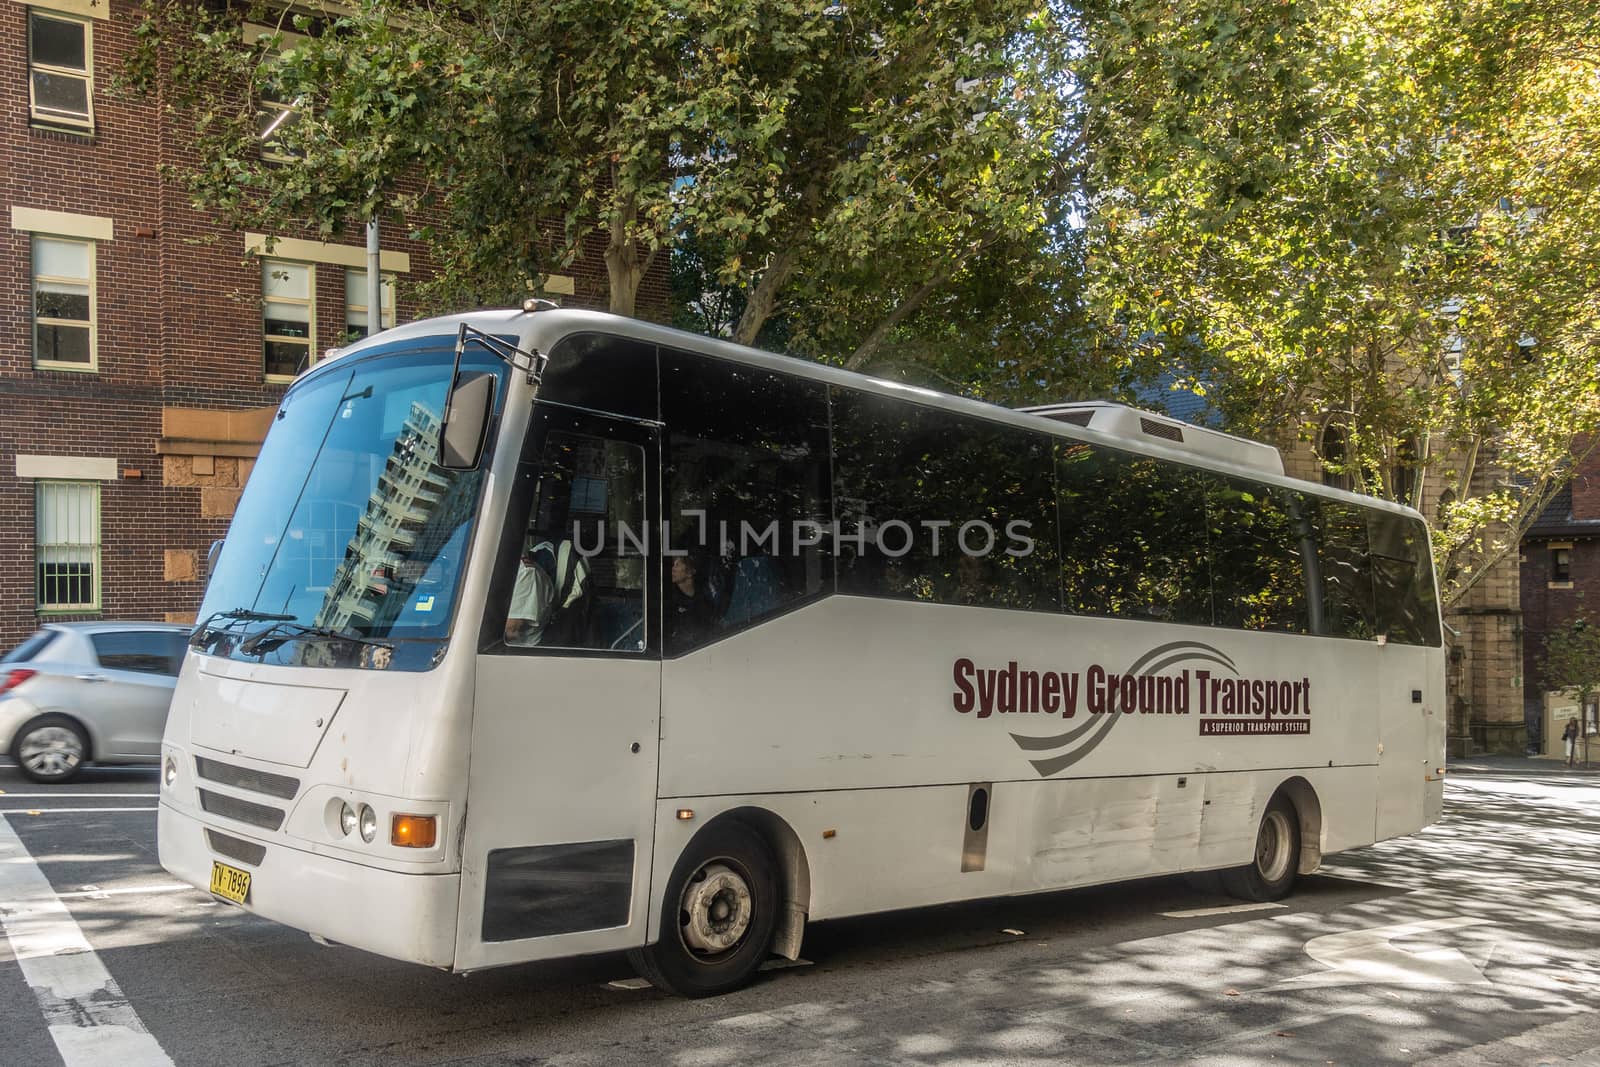 Sydney Ground Transport bus in town, Sydney Australia. by Claudine